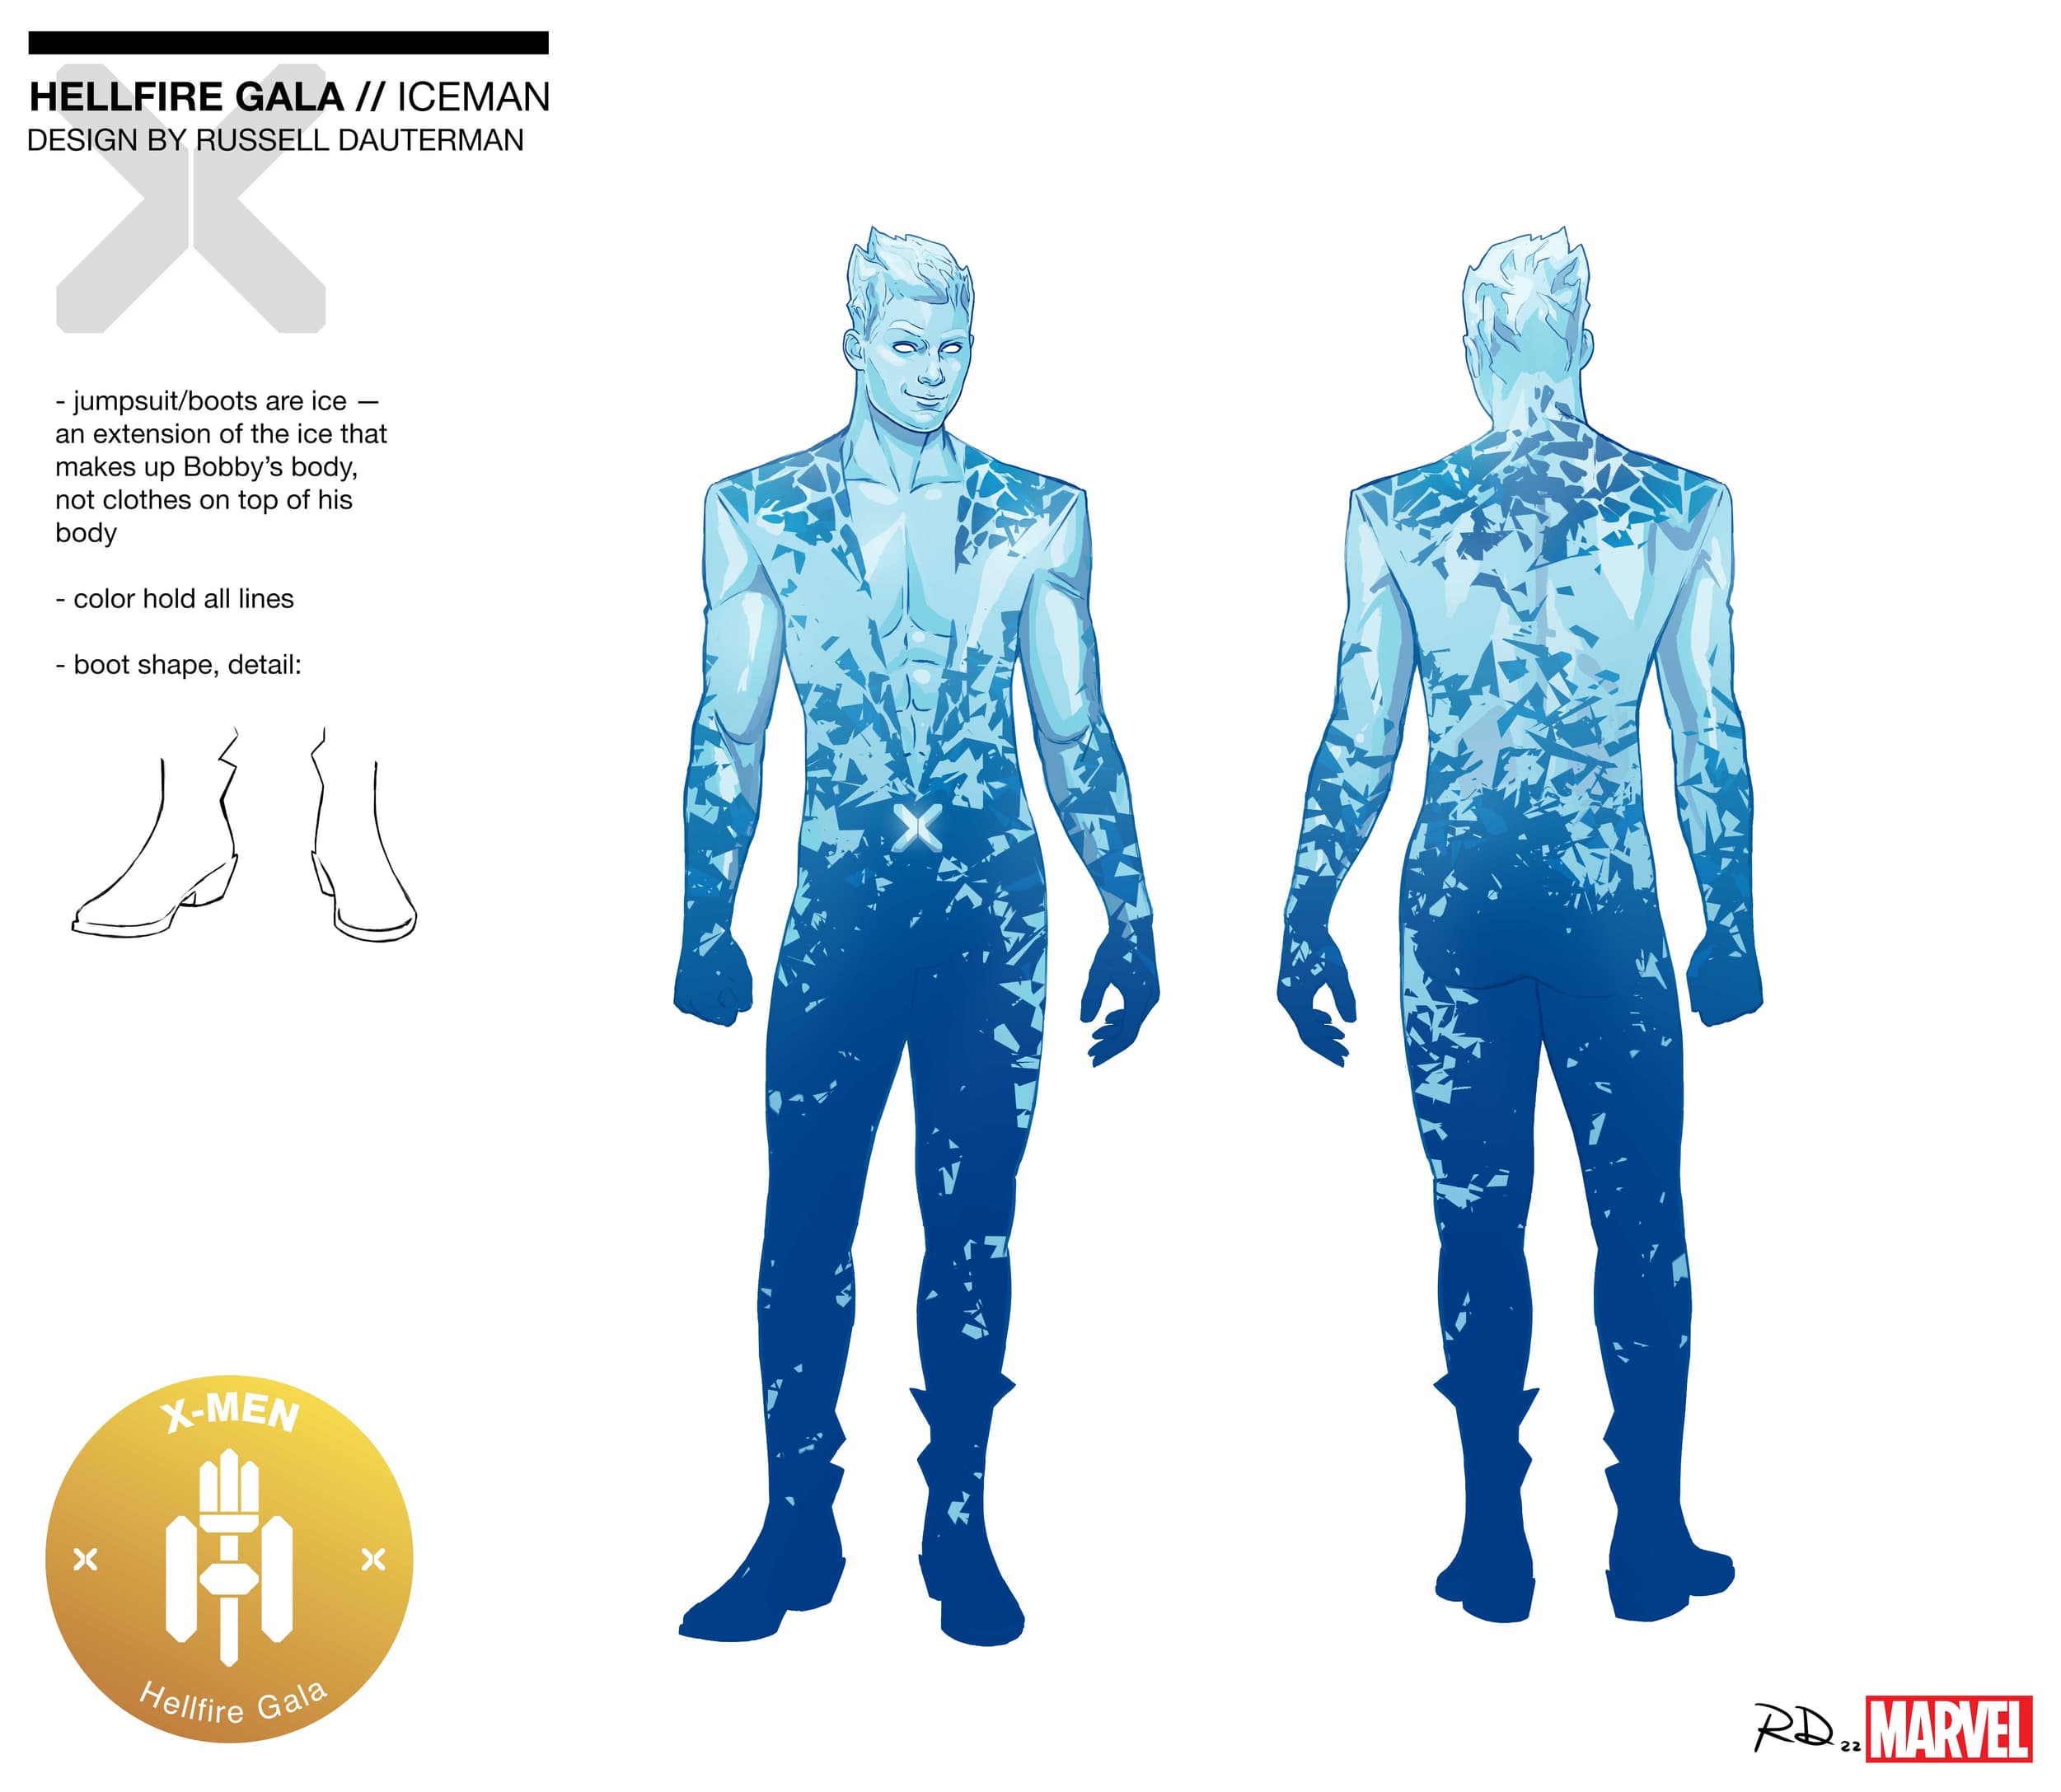 Iceman Hellfire Gala 2022 Design by Russell Dauterman